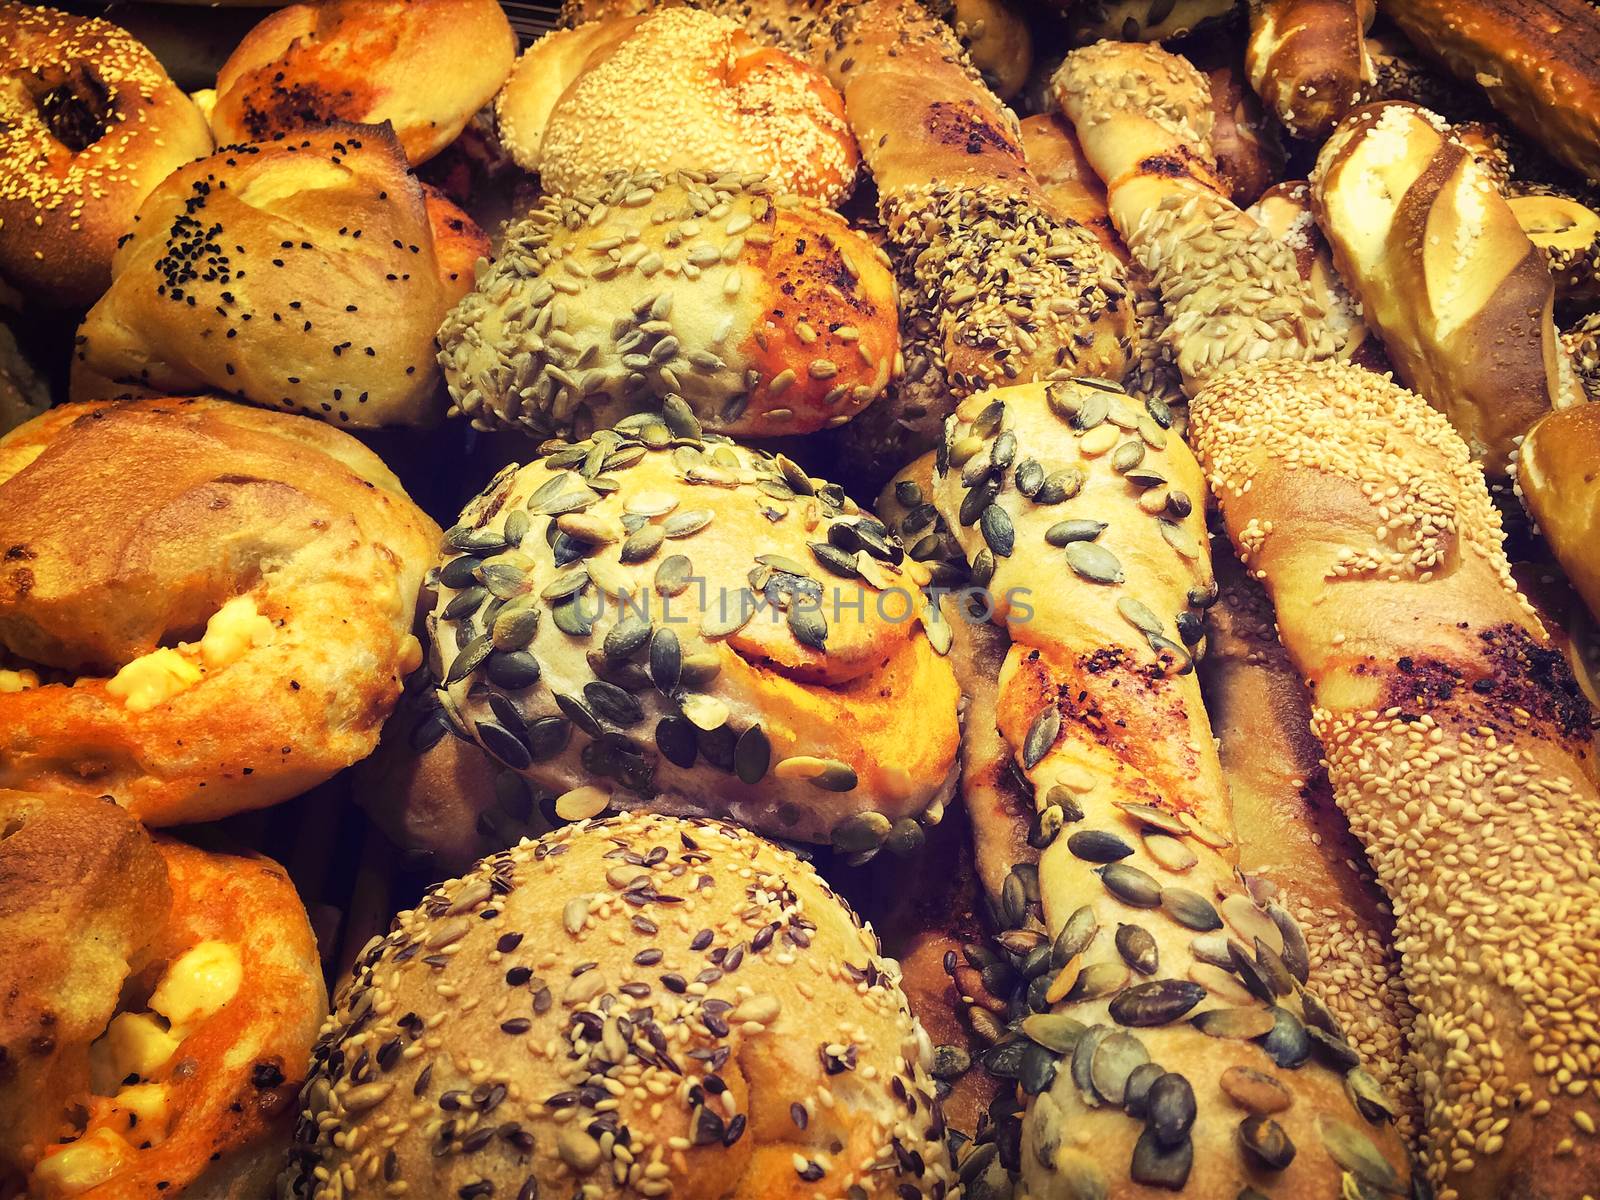 Variety of freshly baked bread in a German bakery.